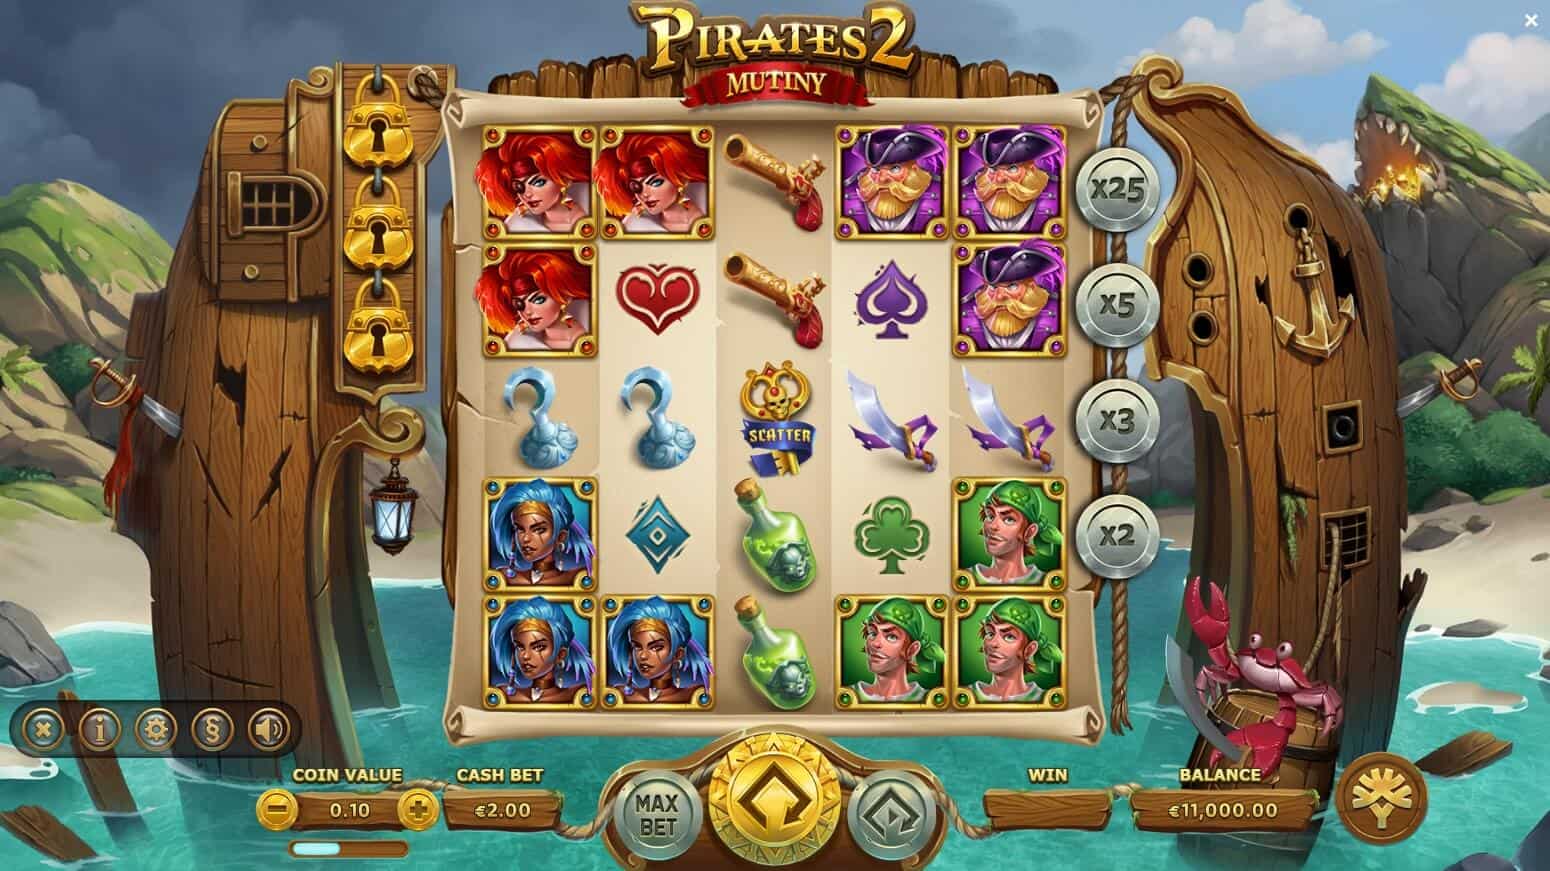 Pirates 2 Mutiny Yggdrasil slotxo